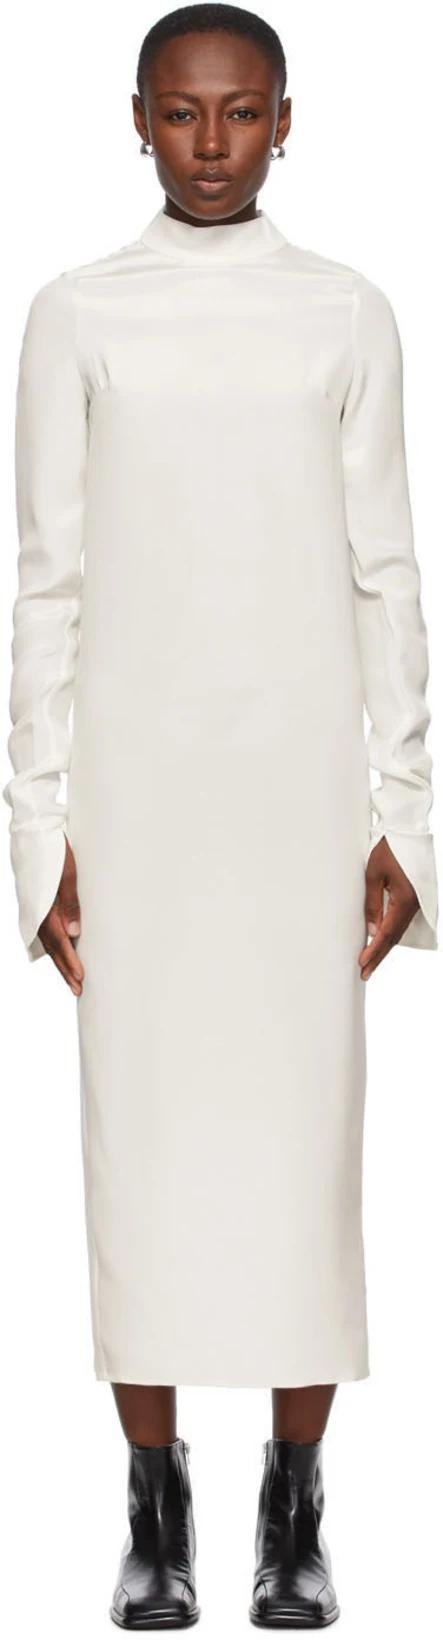 Off-White Bond Cuff Dress by WINNIE NEW YORK